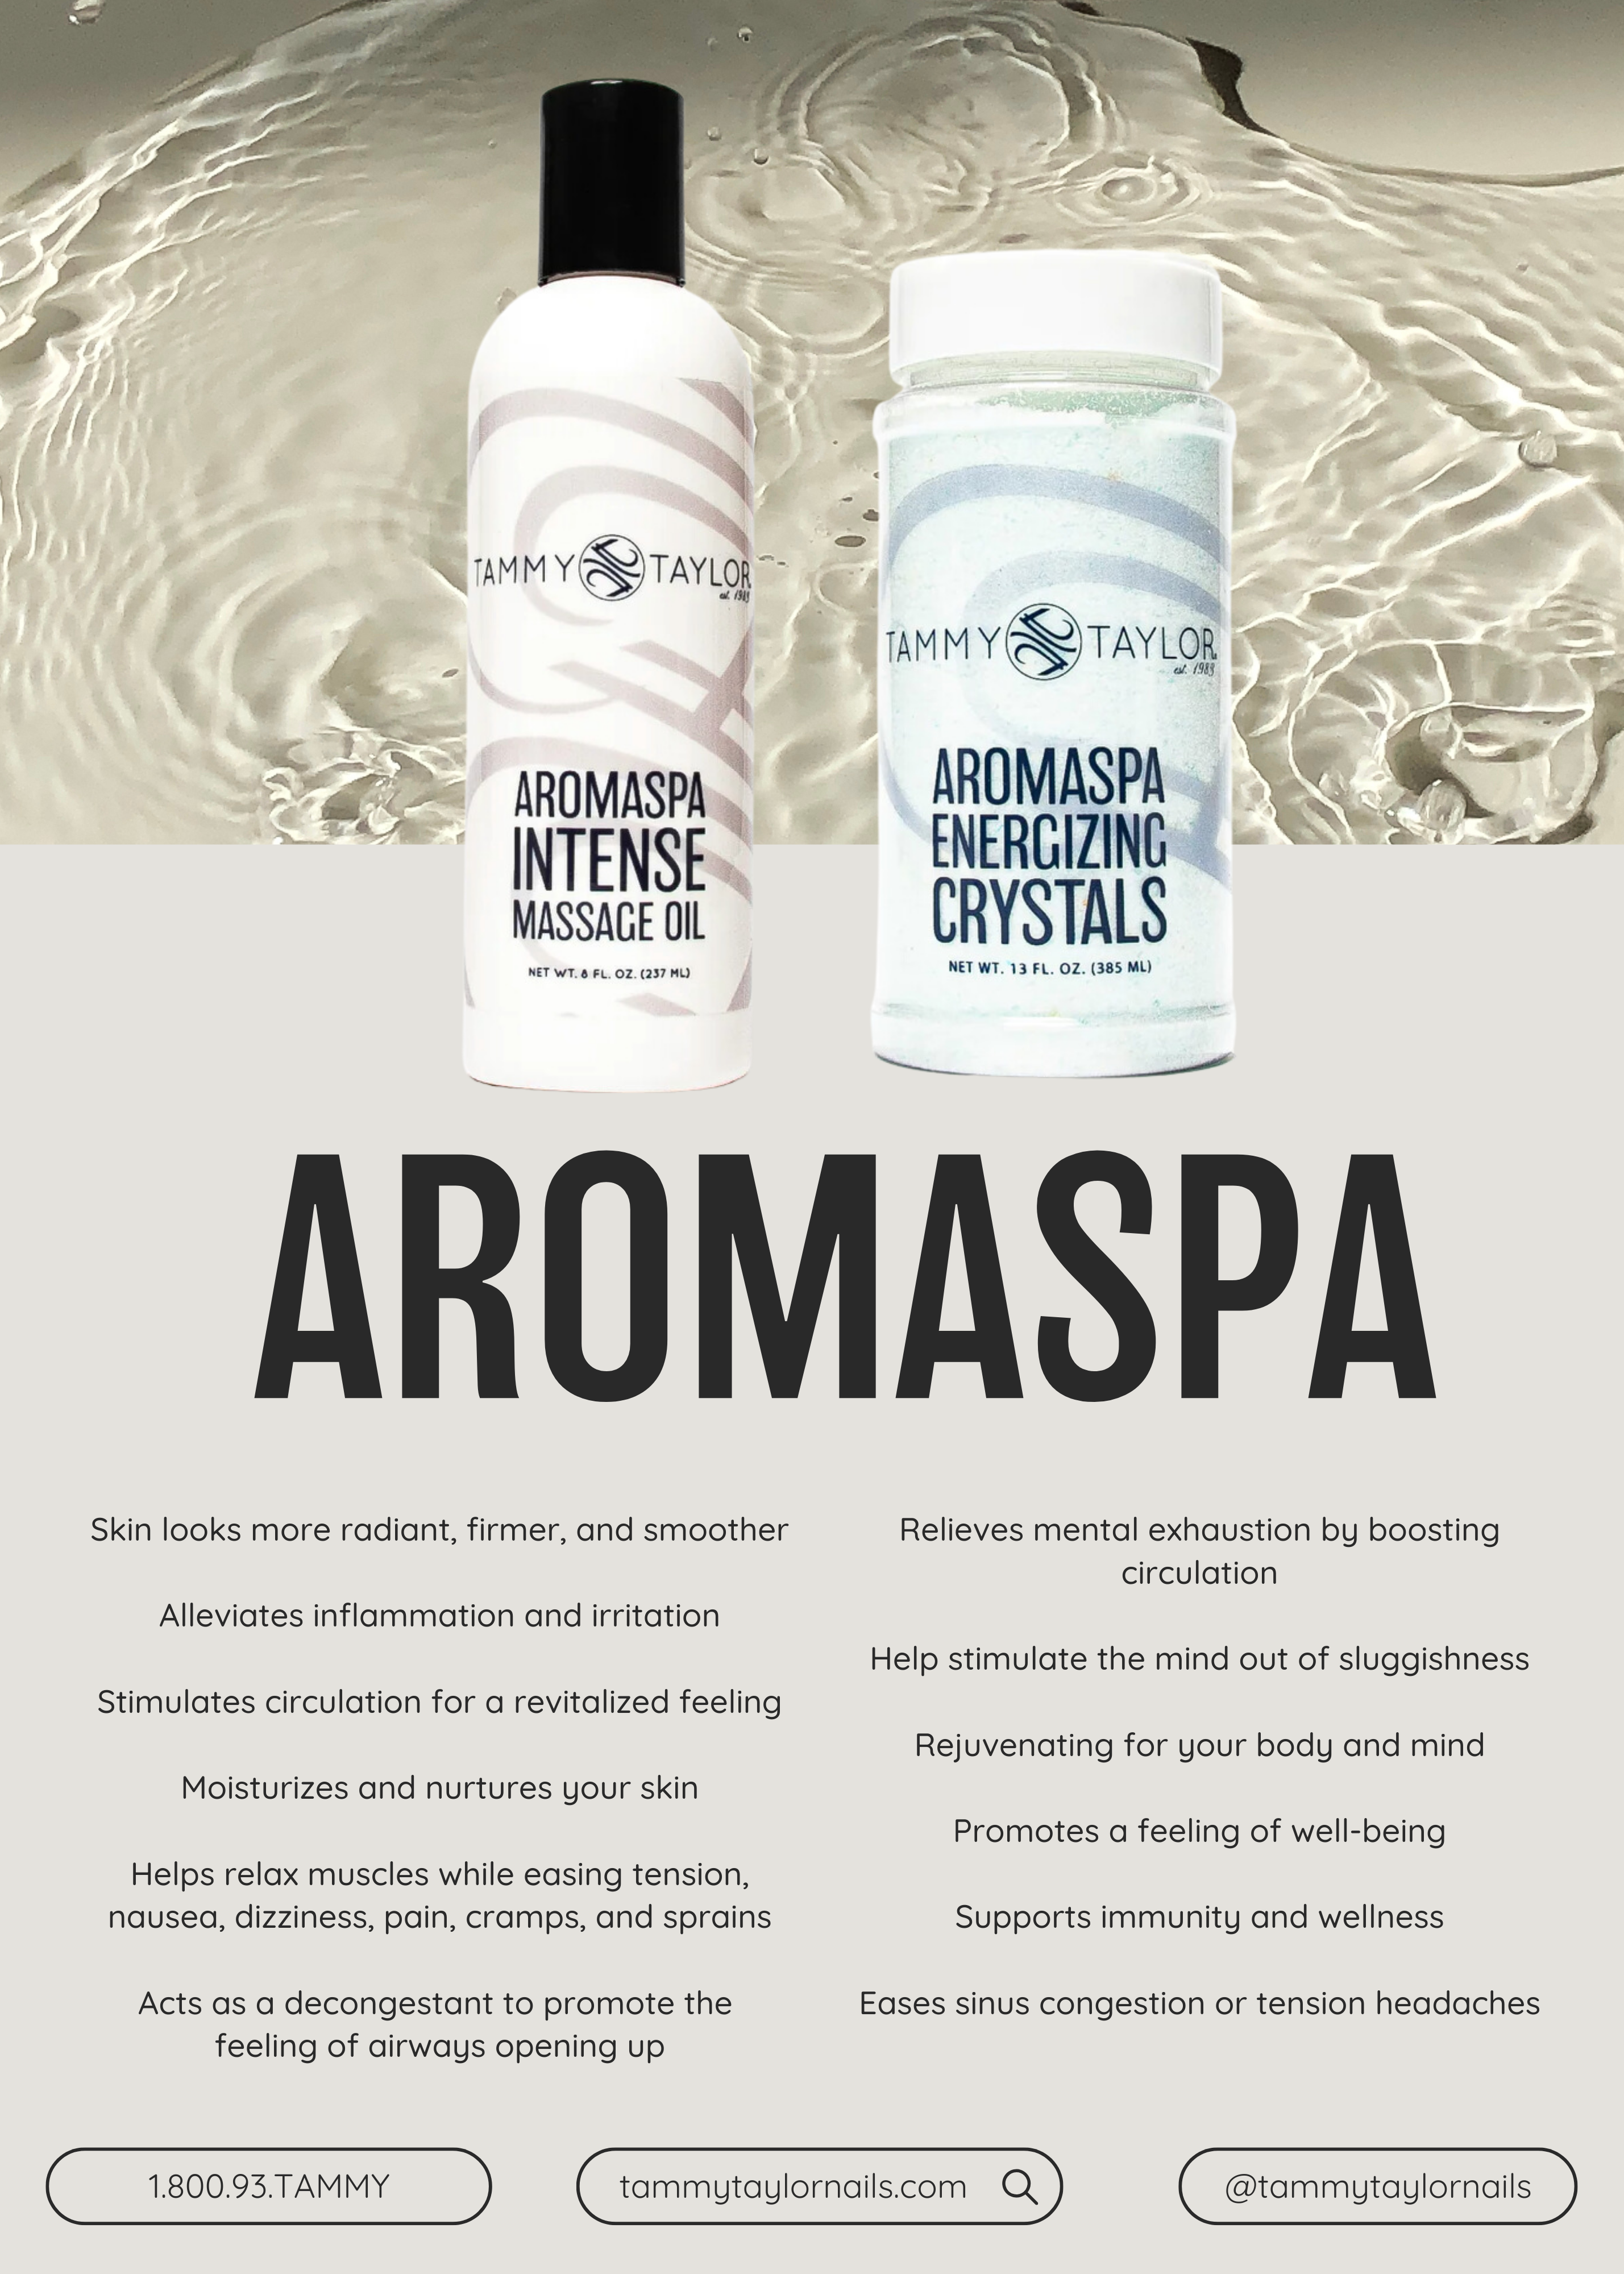 AromaSpa Intense Massage Oil